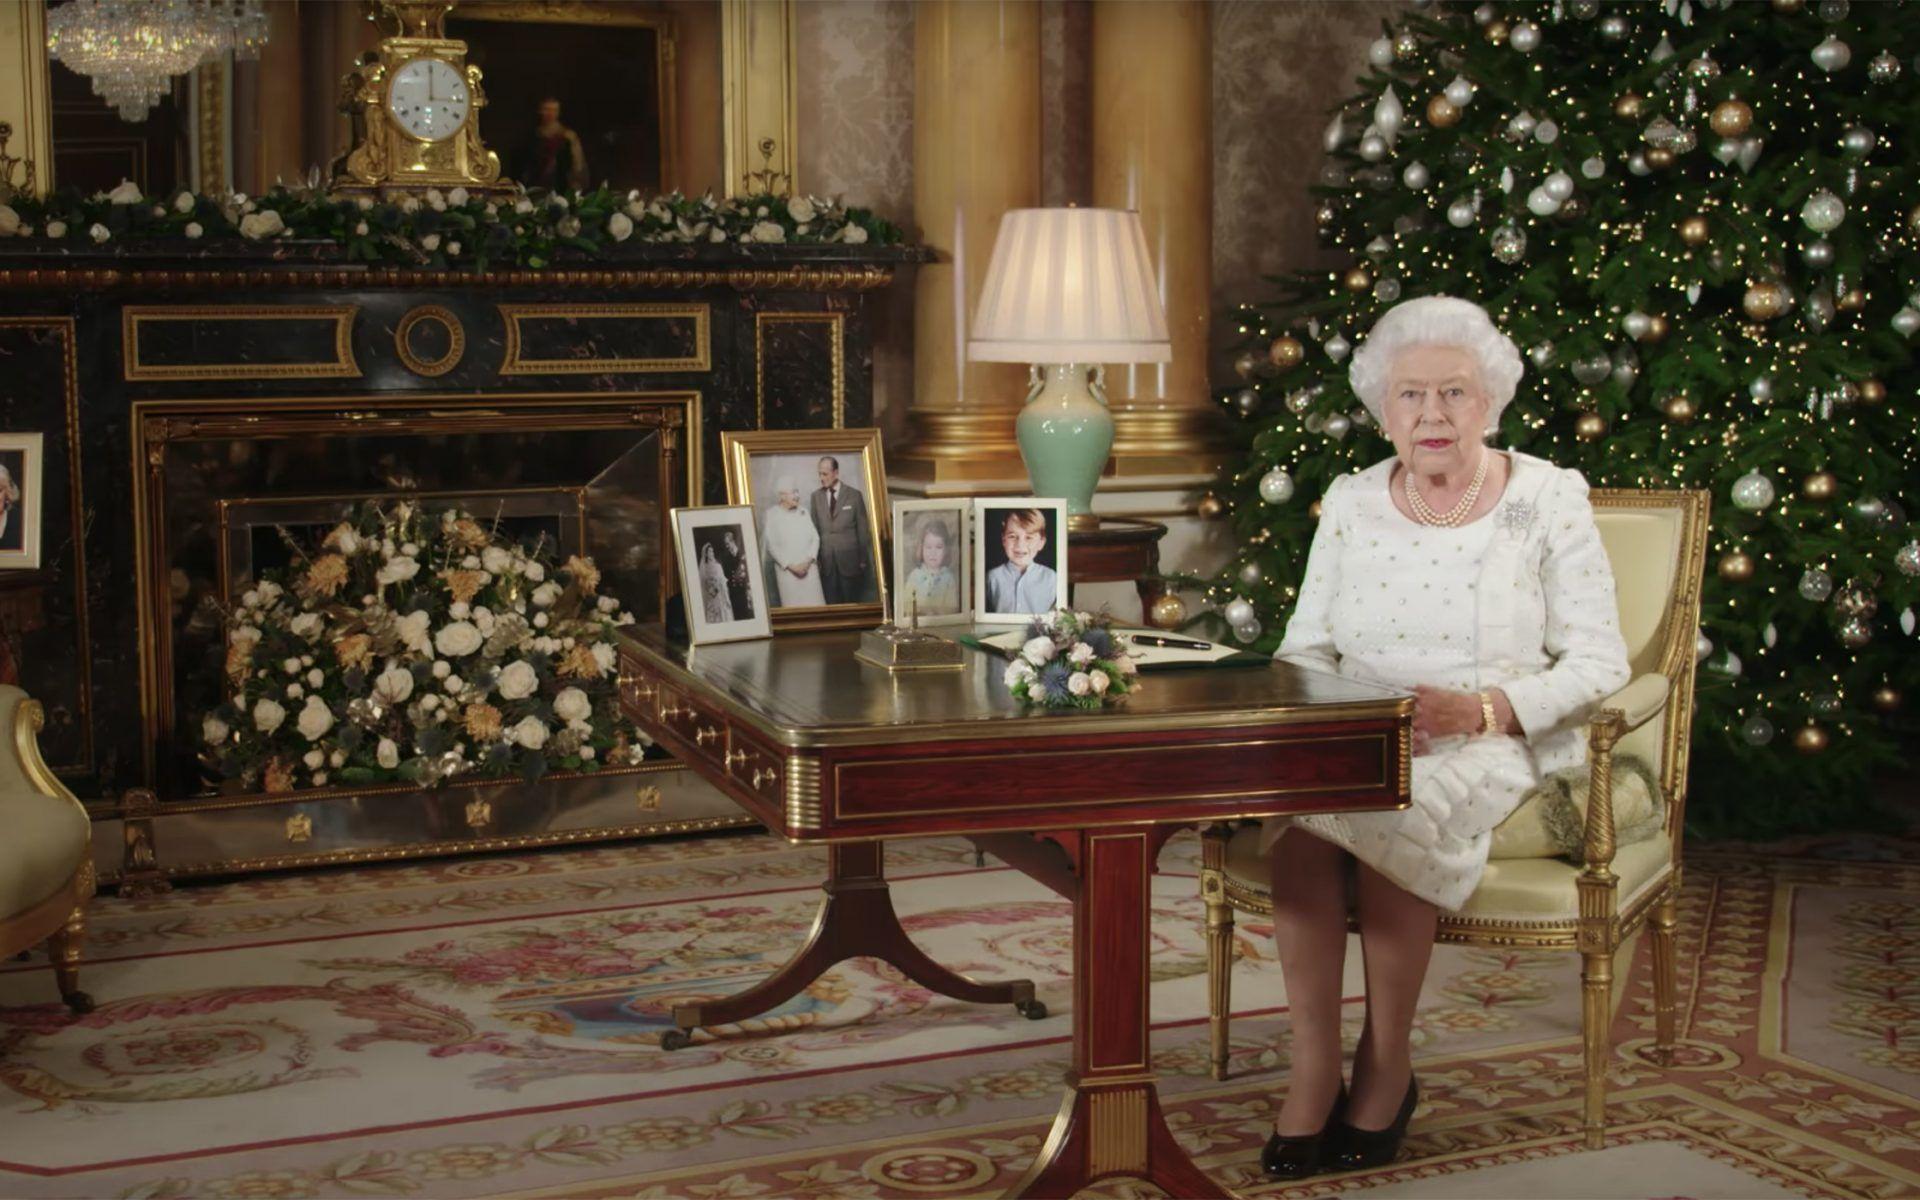 Buckingham Palace Christmas Logo - See How the Royal Family Decorates for Christmas at Buckingham ...